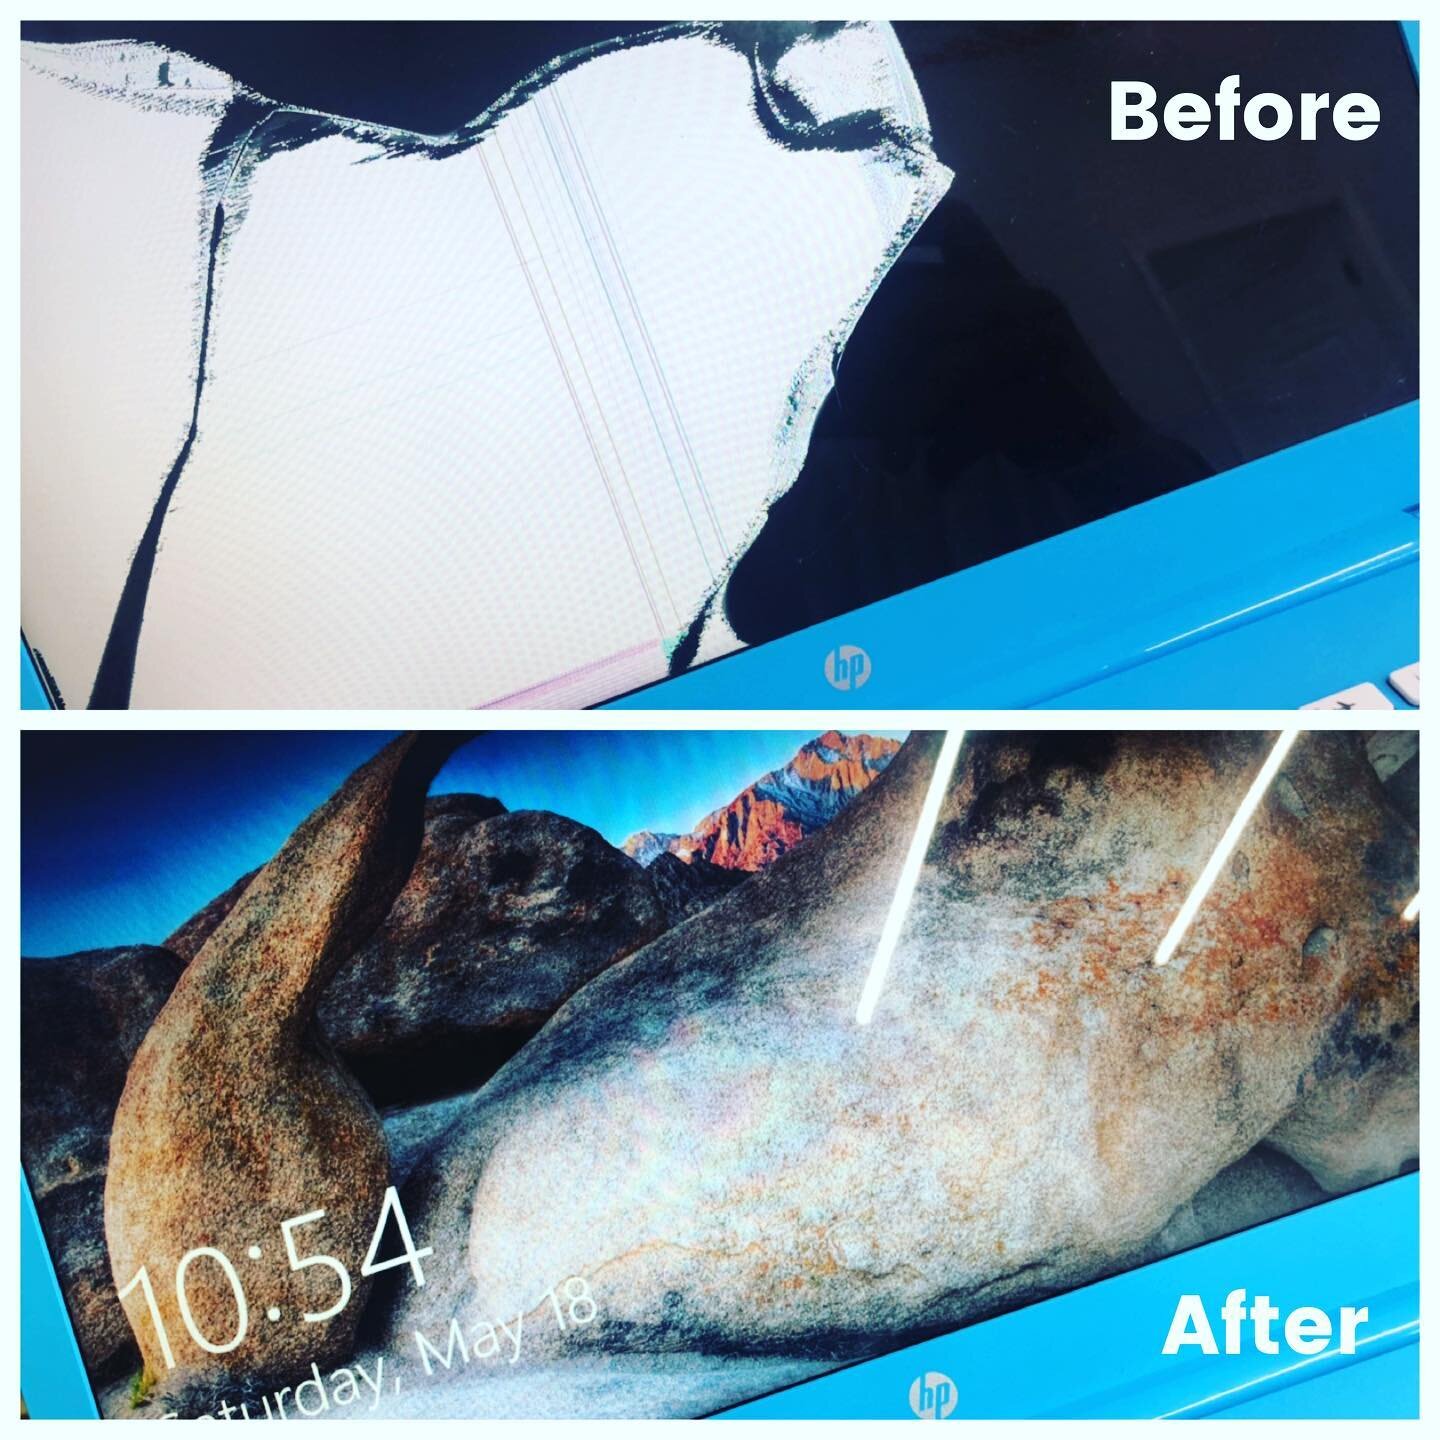 Laptop Screen Repairs Under 30 Minutes! Only At PhoneWorld! #atlantacellphonerepair #phoneworld #phoneworldtucker #tuckerga #hprepair #laptoprepair #computerrepair #atlantaga